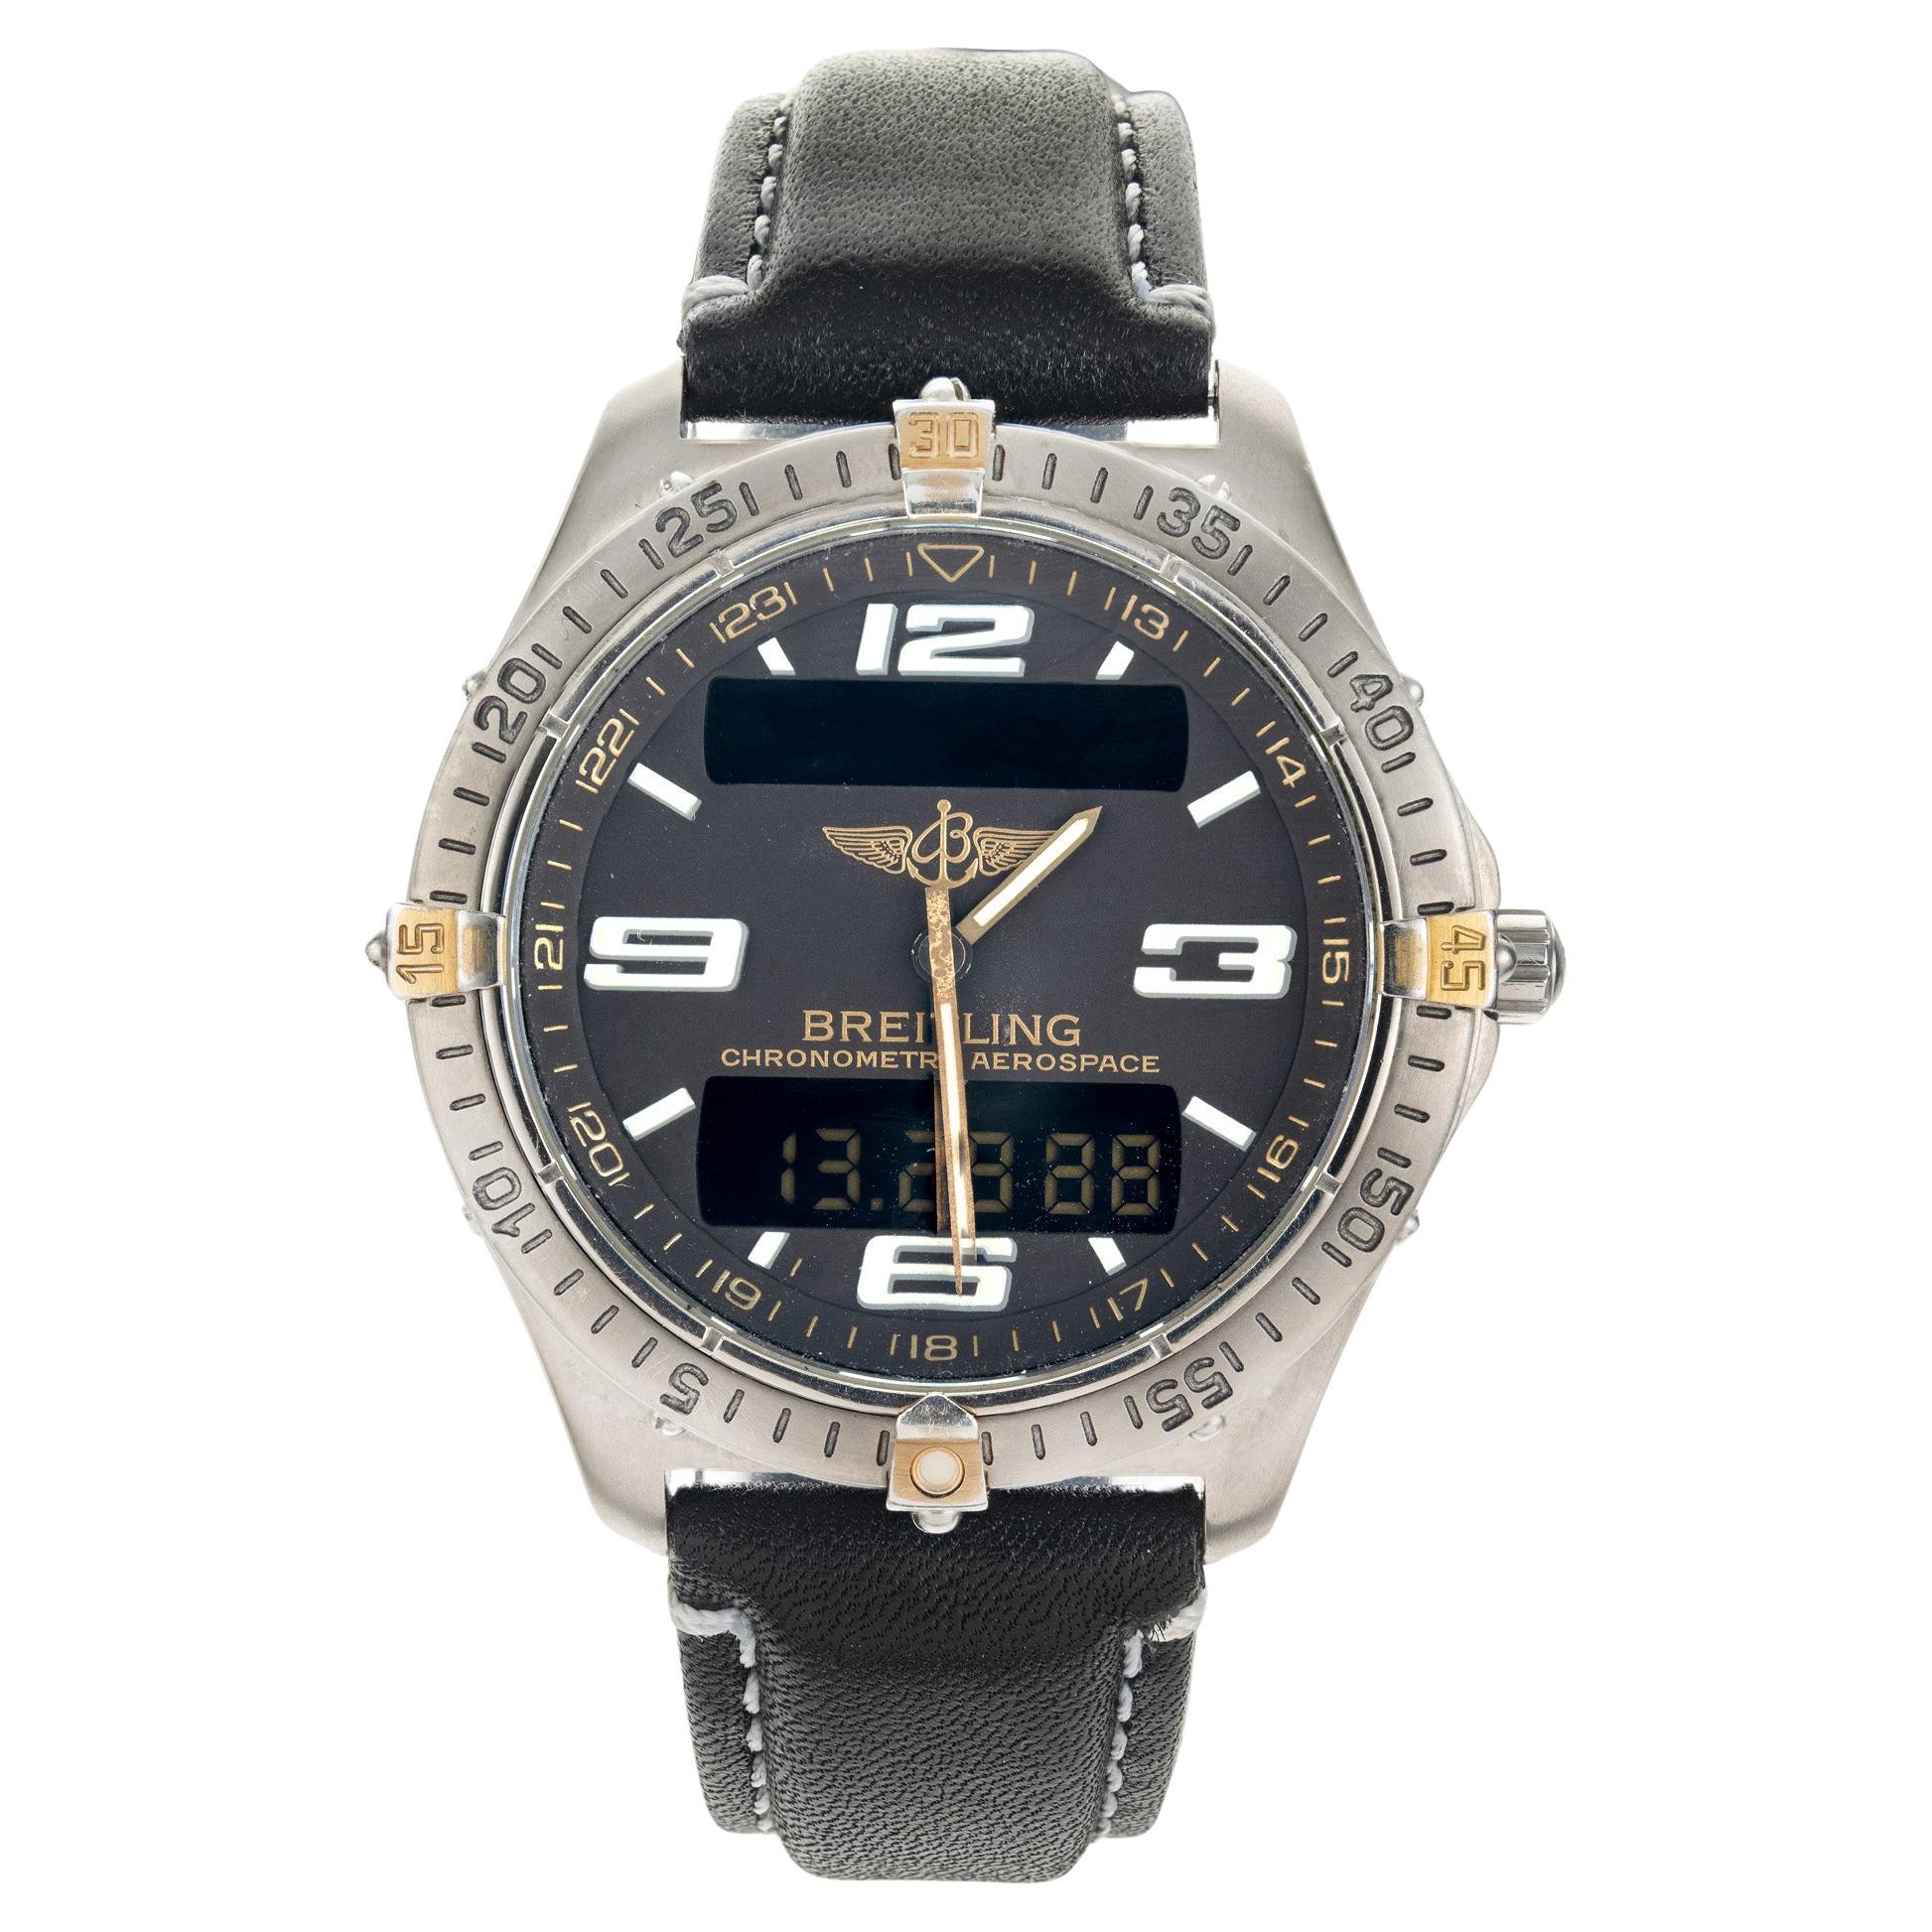 Breitling Titanium 18k Chronometer Aerospace Wristwatch